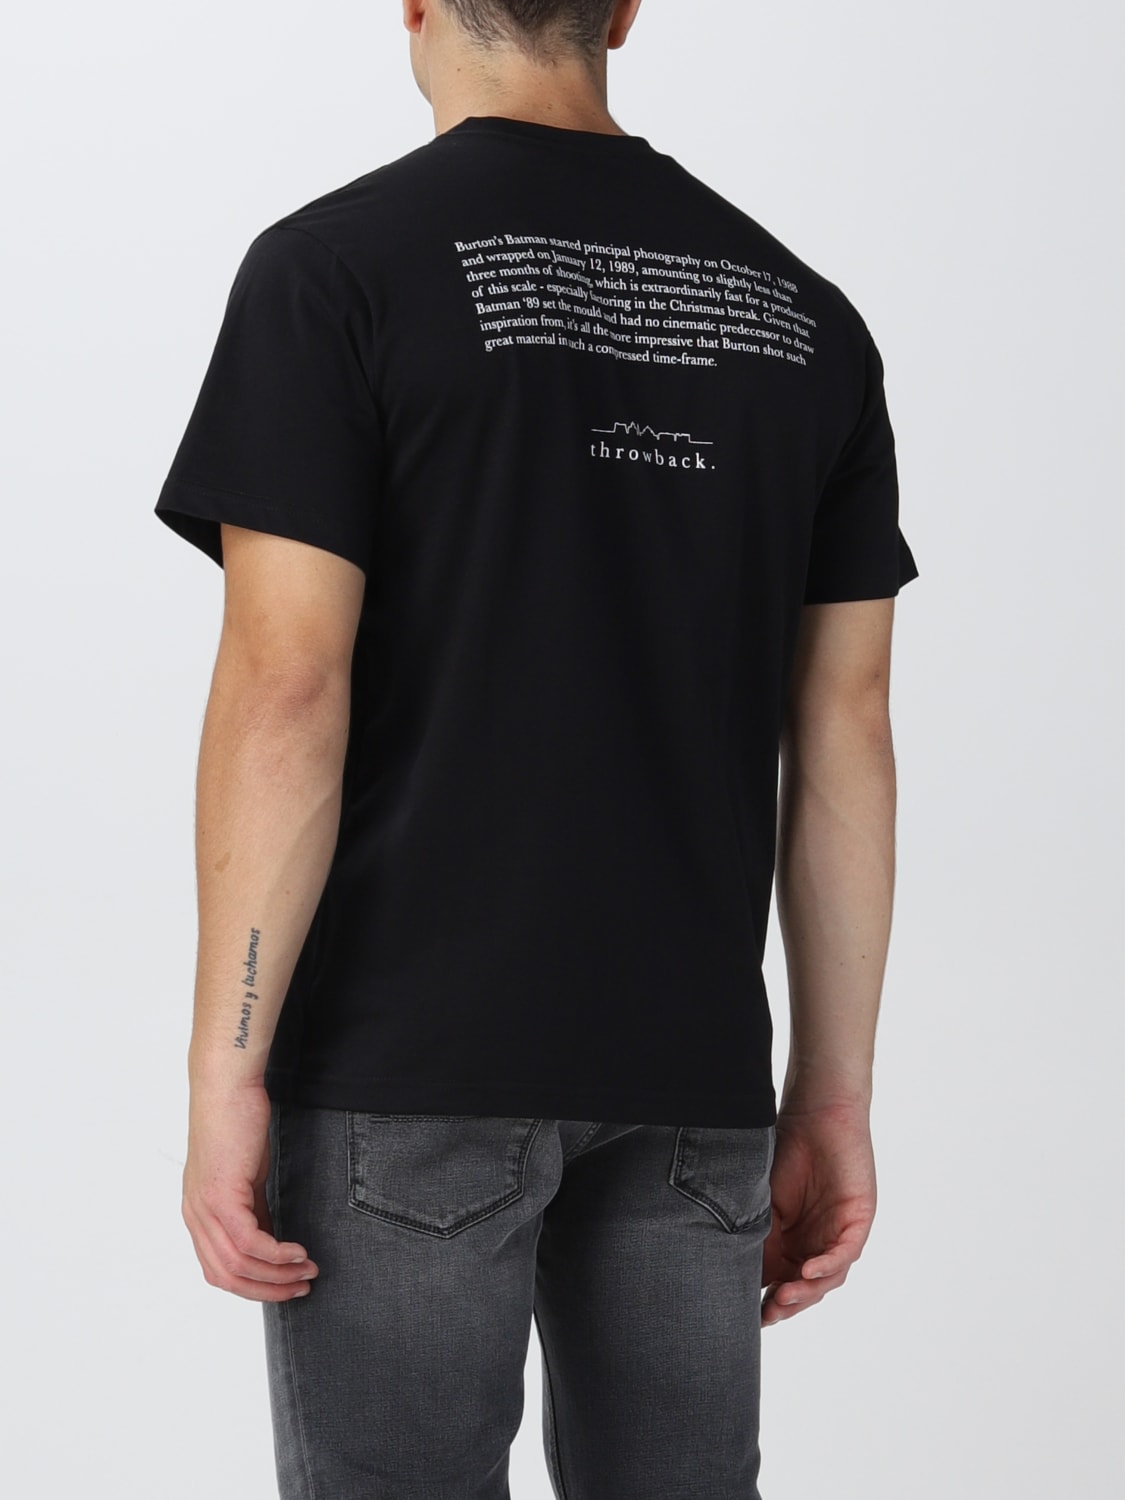 THROWBACK: t-shirt for man - Black | Throwback t-shirt TBTBAT online on ...